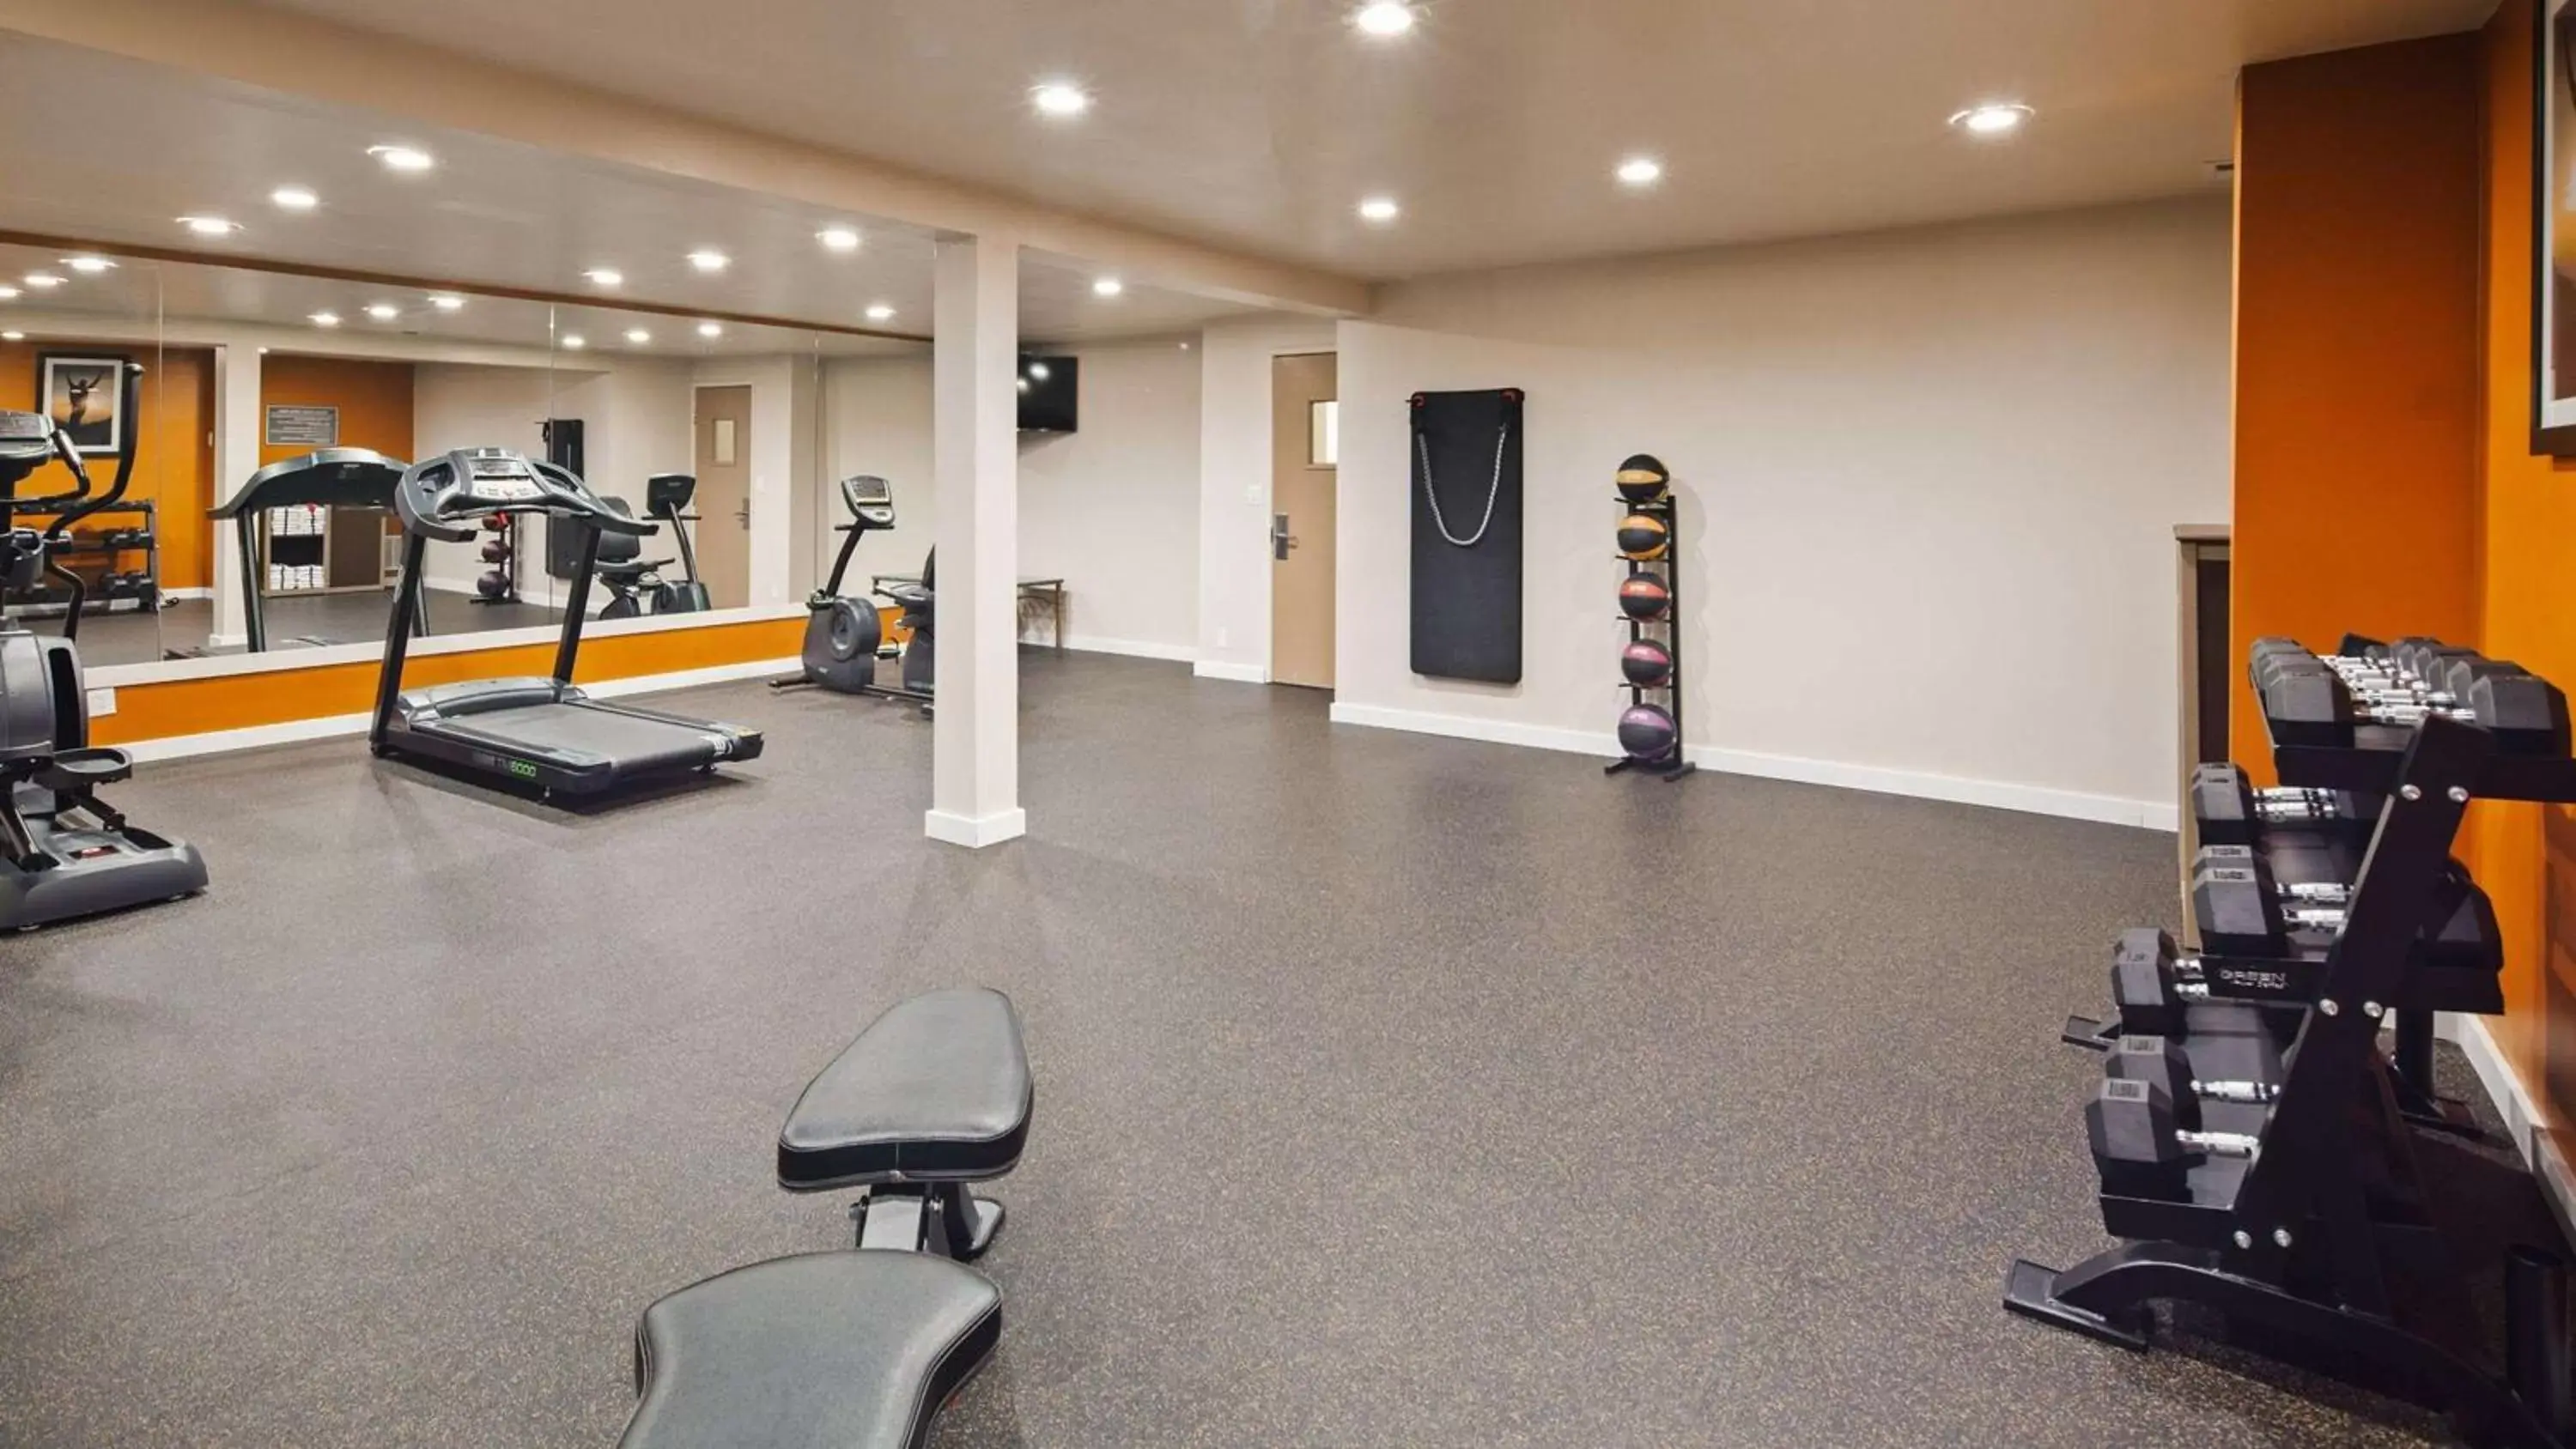 Fitness centre/facilities, Fitness Center/Facilities in Best Western Cascadia Inn